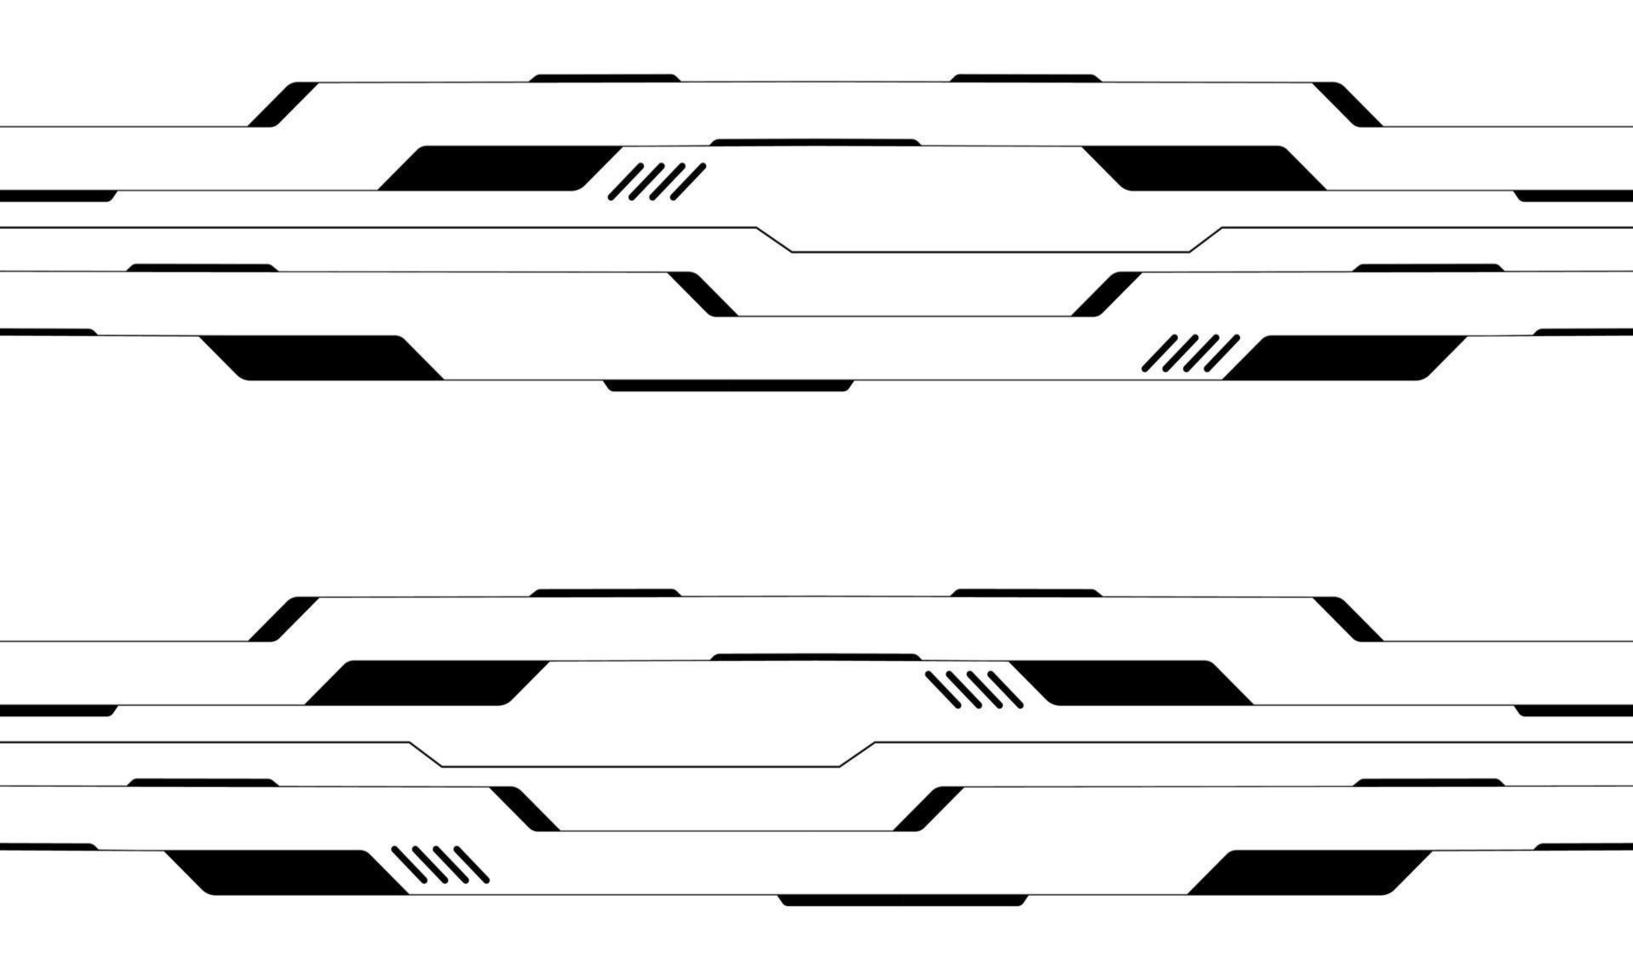 circuito cibernético de línea negra abstracta en vector de tecnología futurista moderna de diseño de patrón de fondo transparente blanco